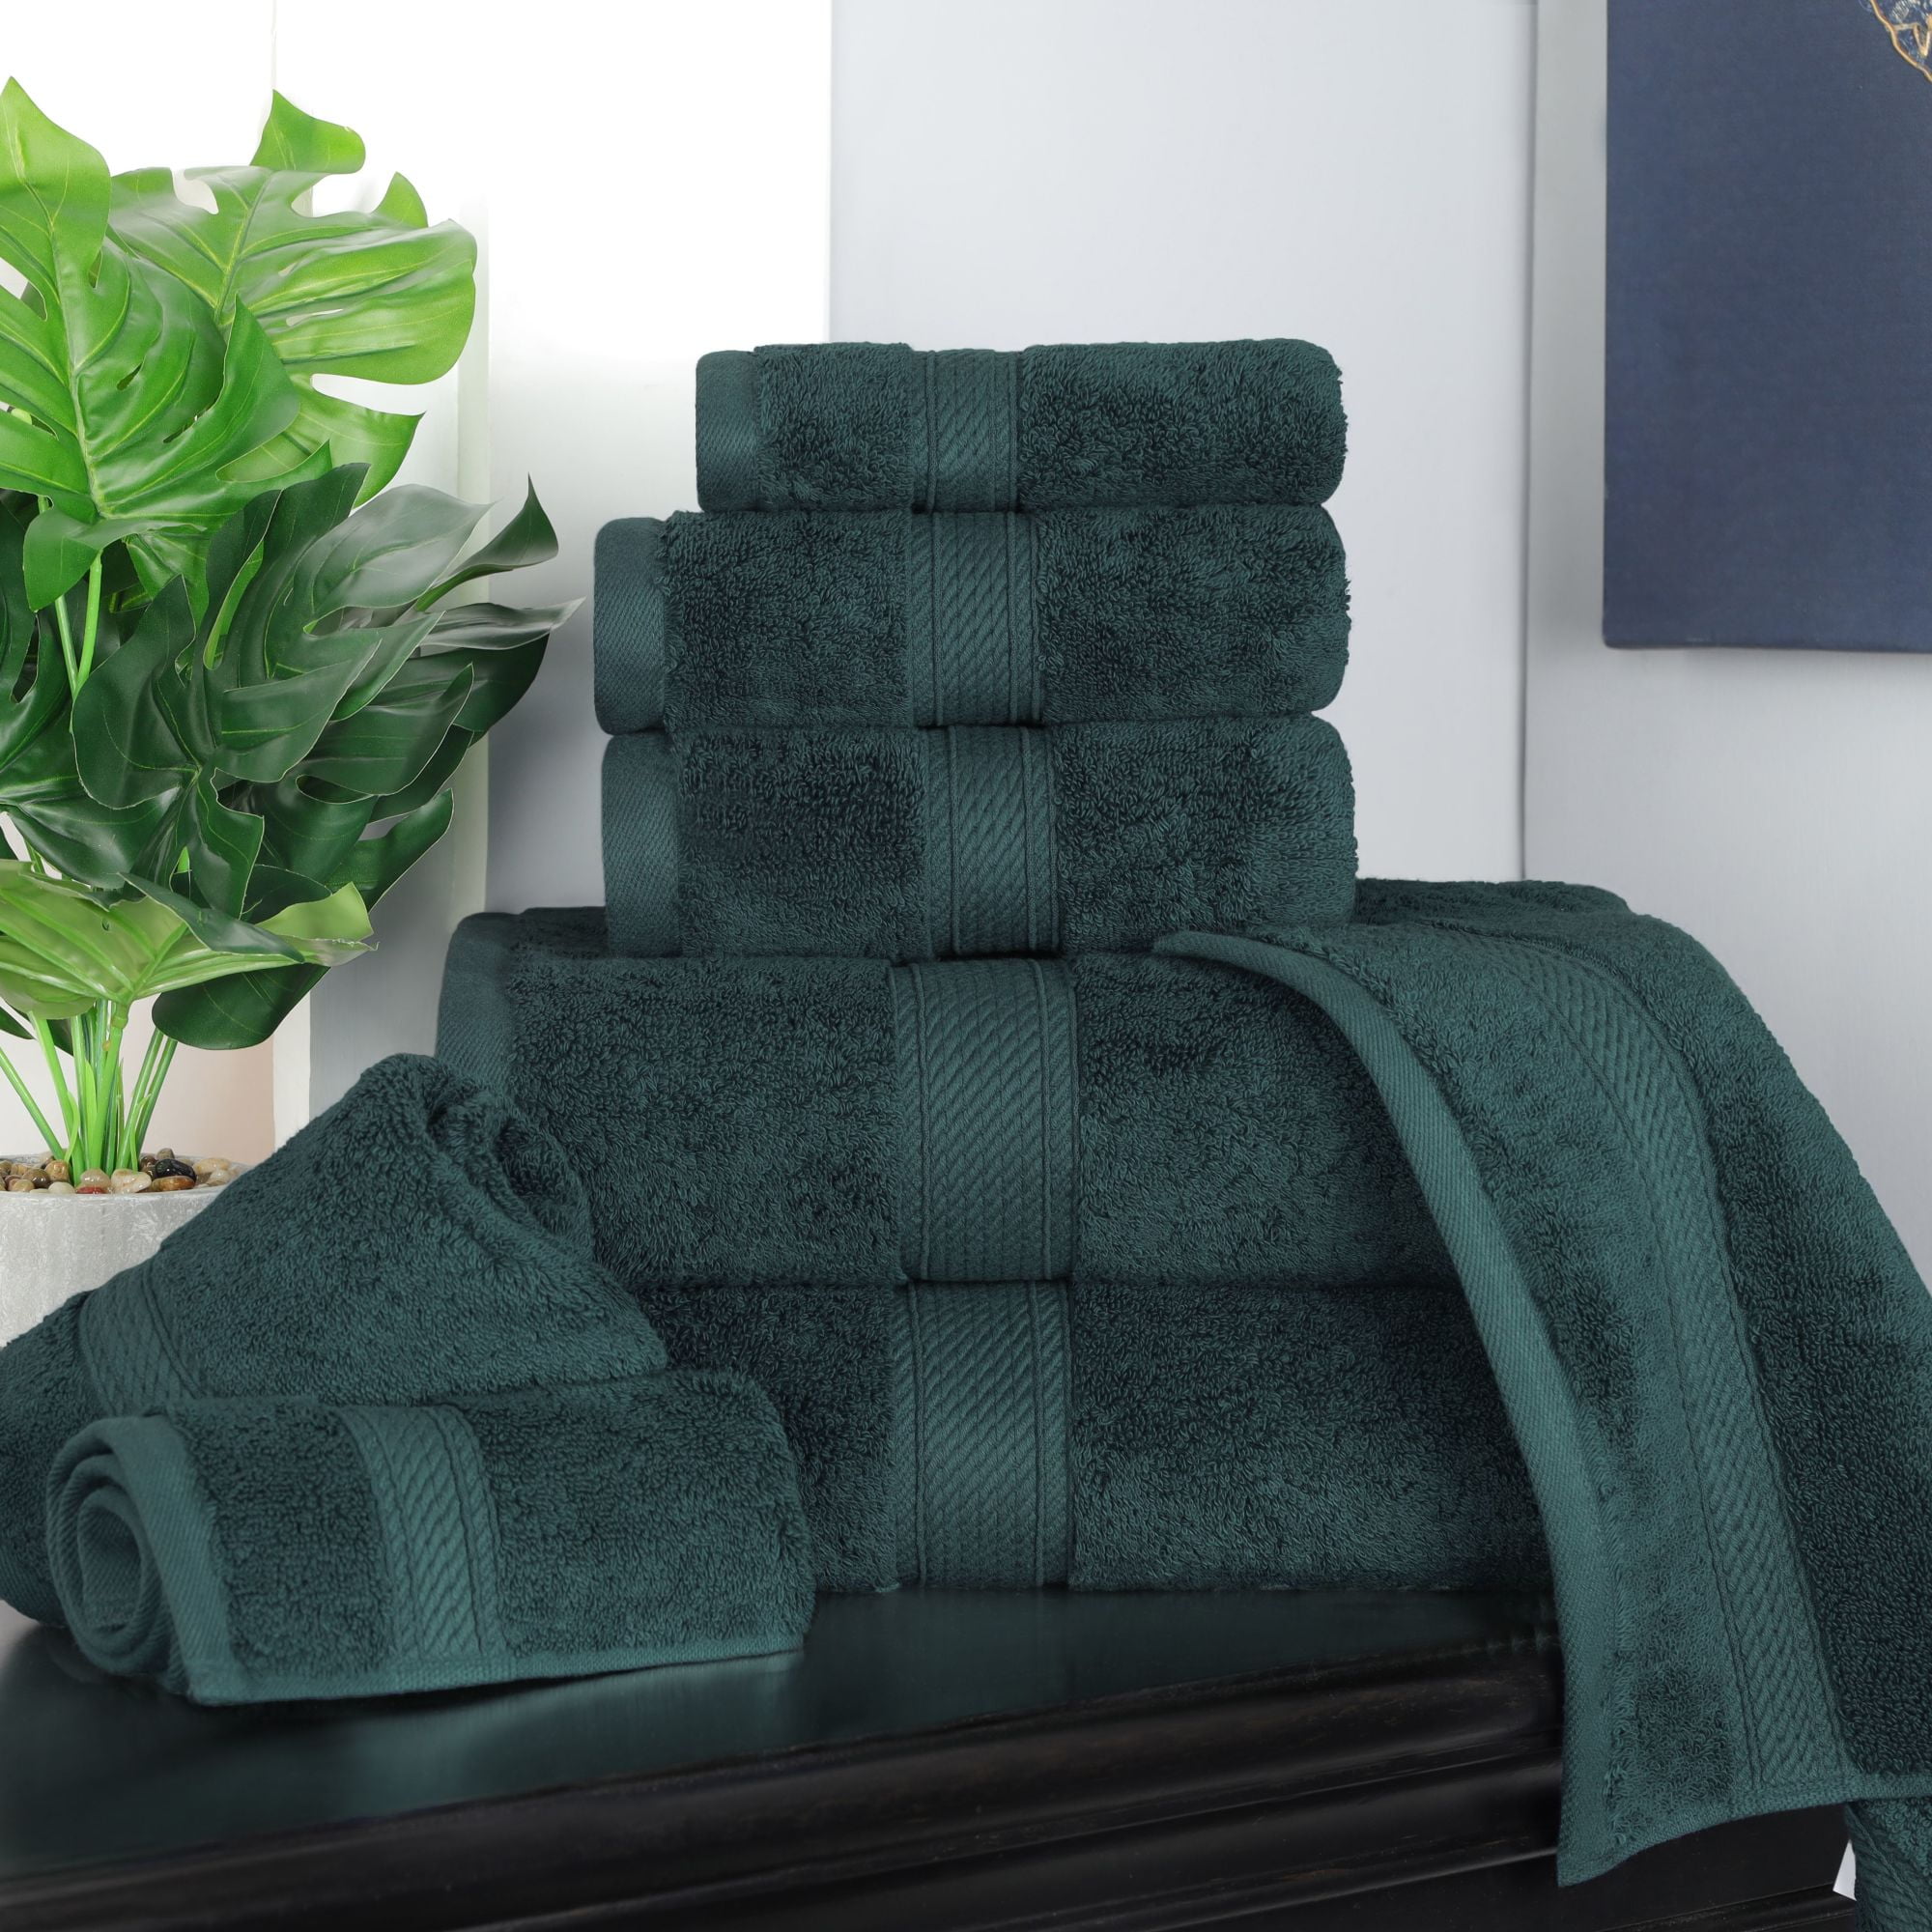 Superior Egyptian Cotton Plush Absorbent Luxury Soft 9-Piece Towel Set Turquoise / 9 Piece Towel Set